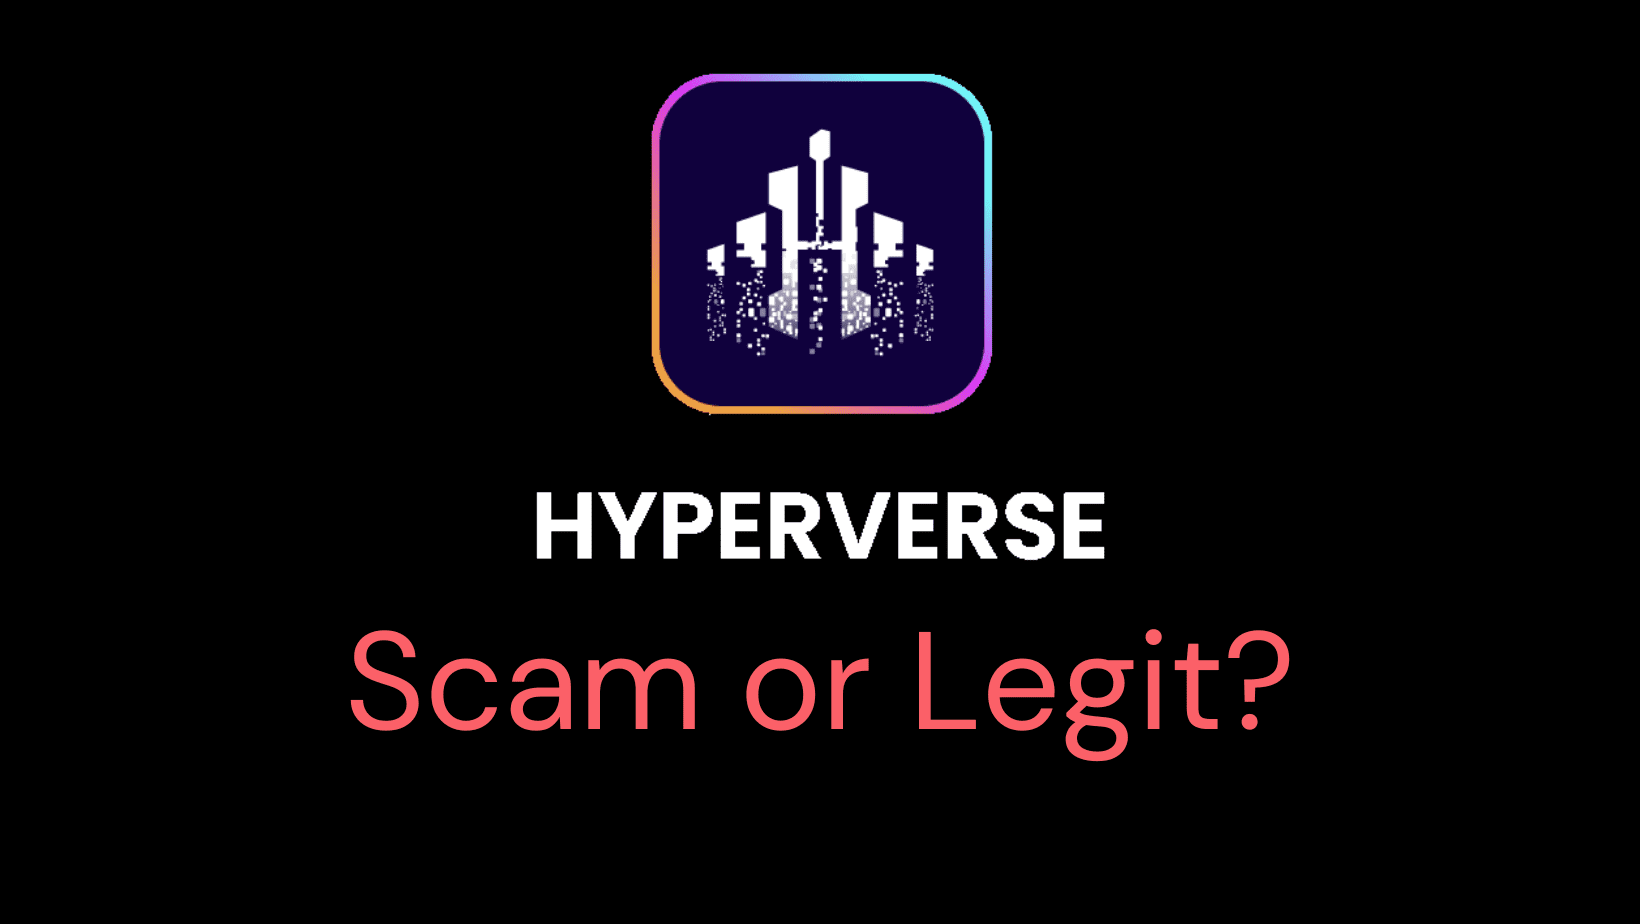 HyperVerse scam or legit?